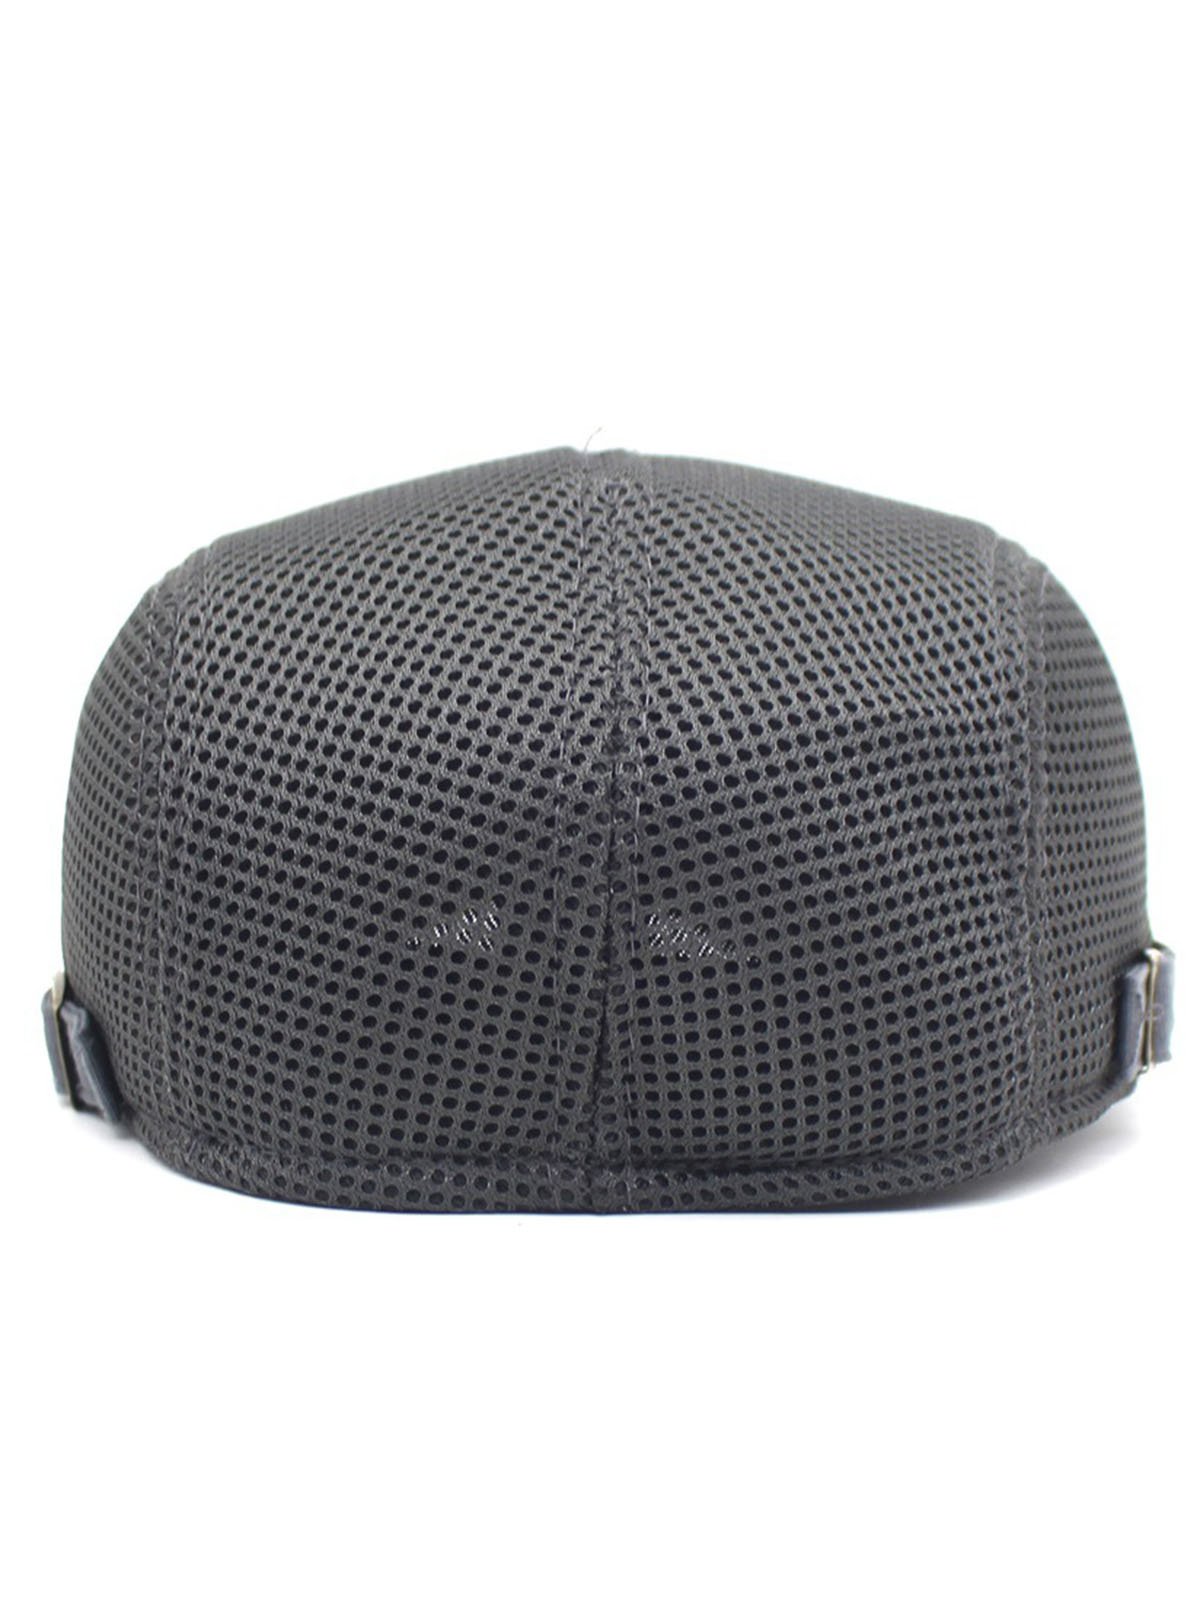 Hardaddy men's breathable cap